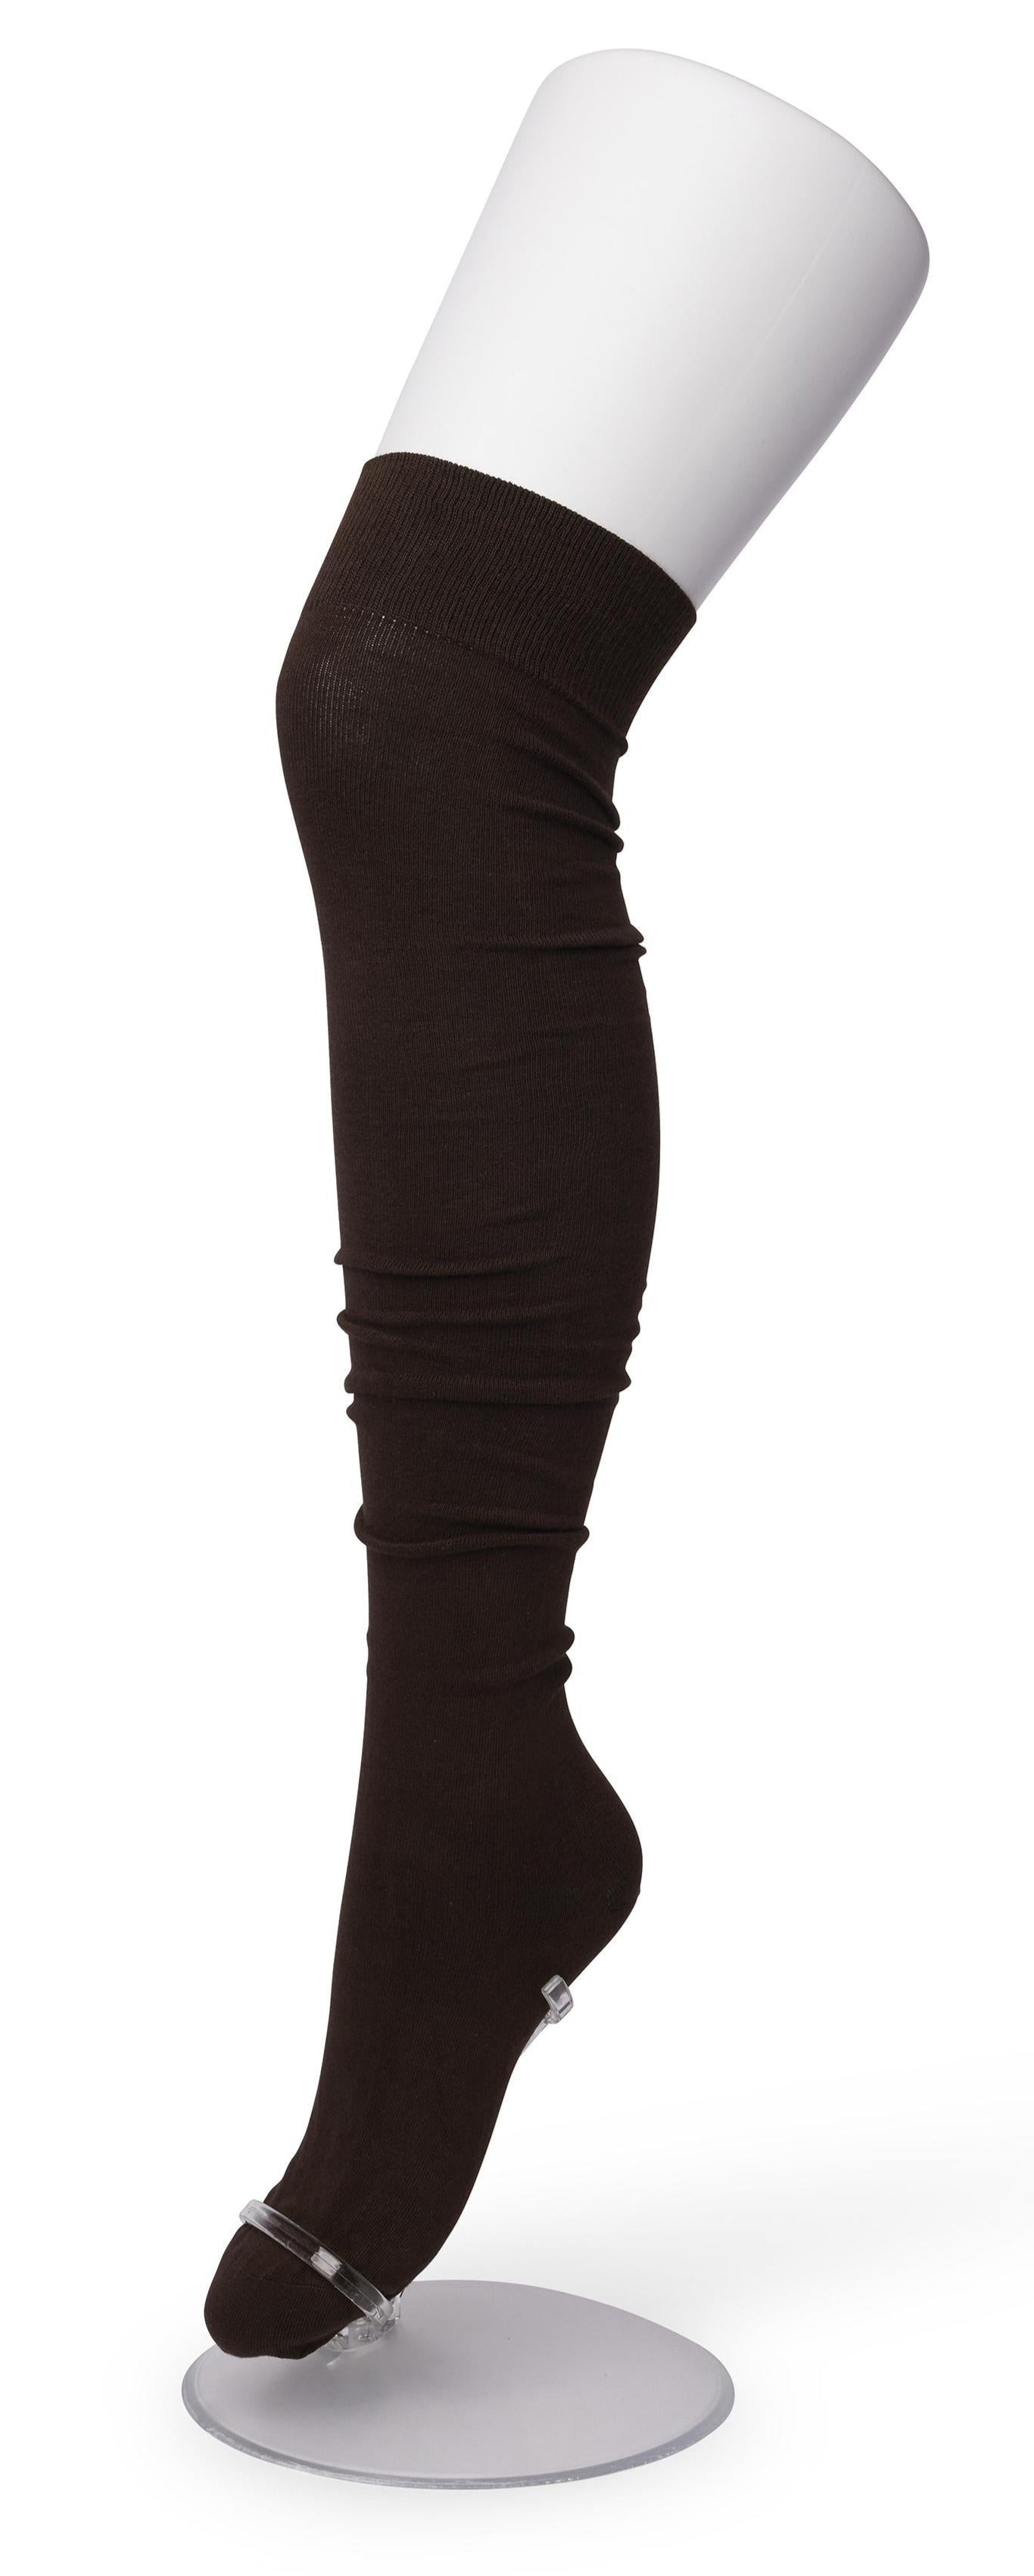 Bonnie Doon Cotton Over The Knee Sock P53496 - dark brown cotton thigh high socks